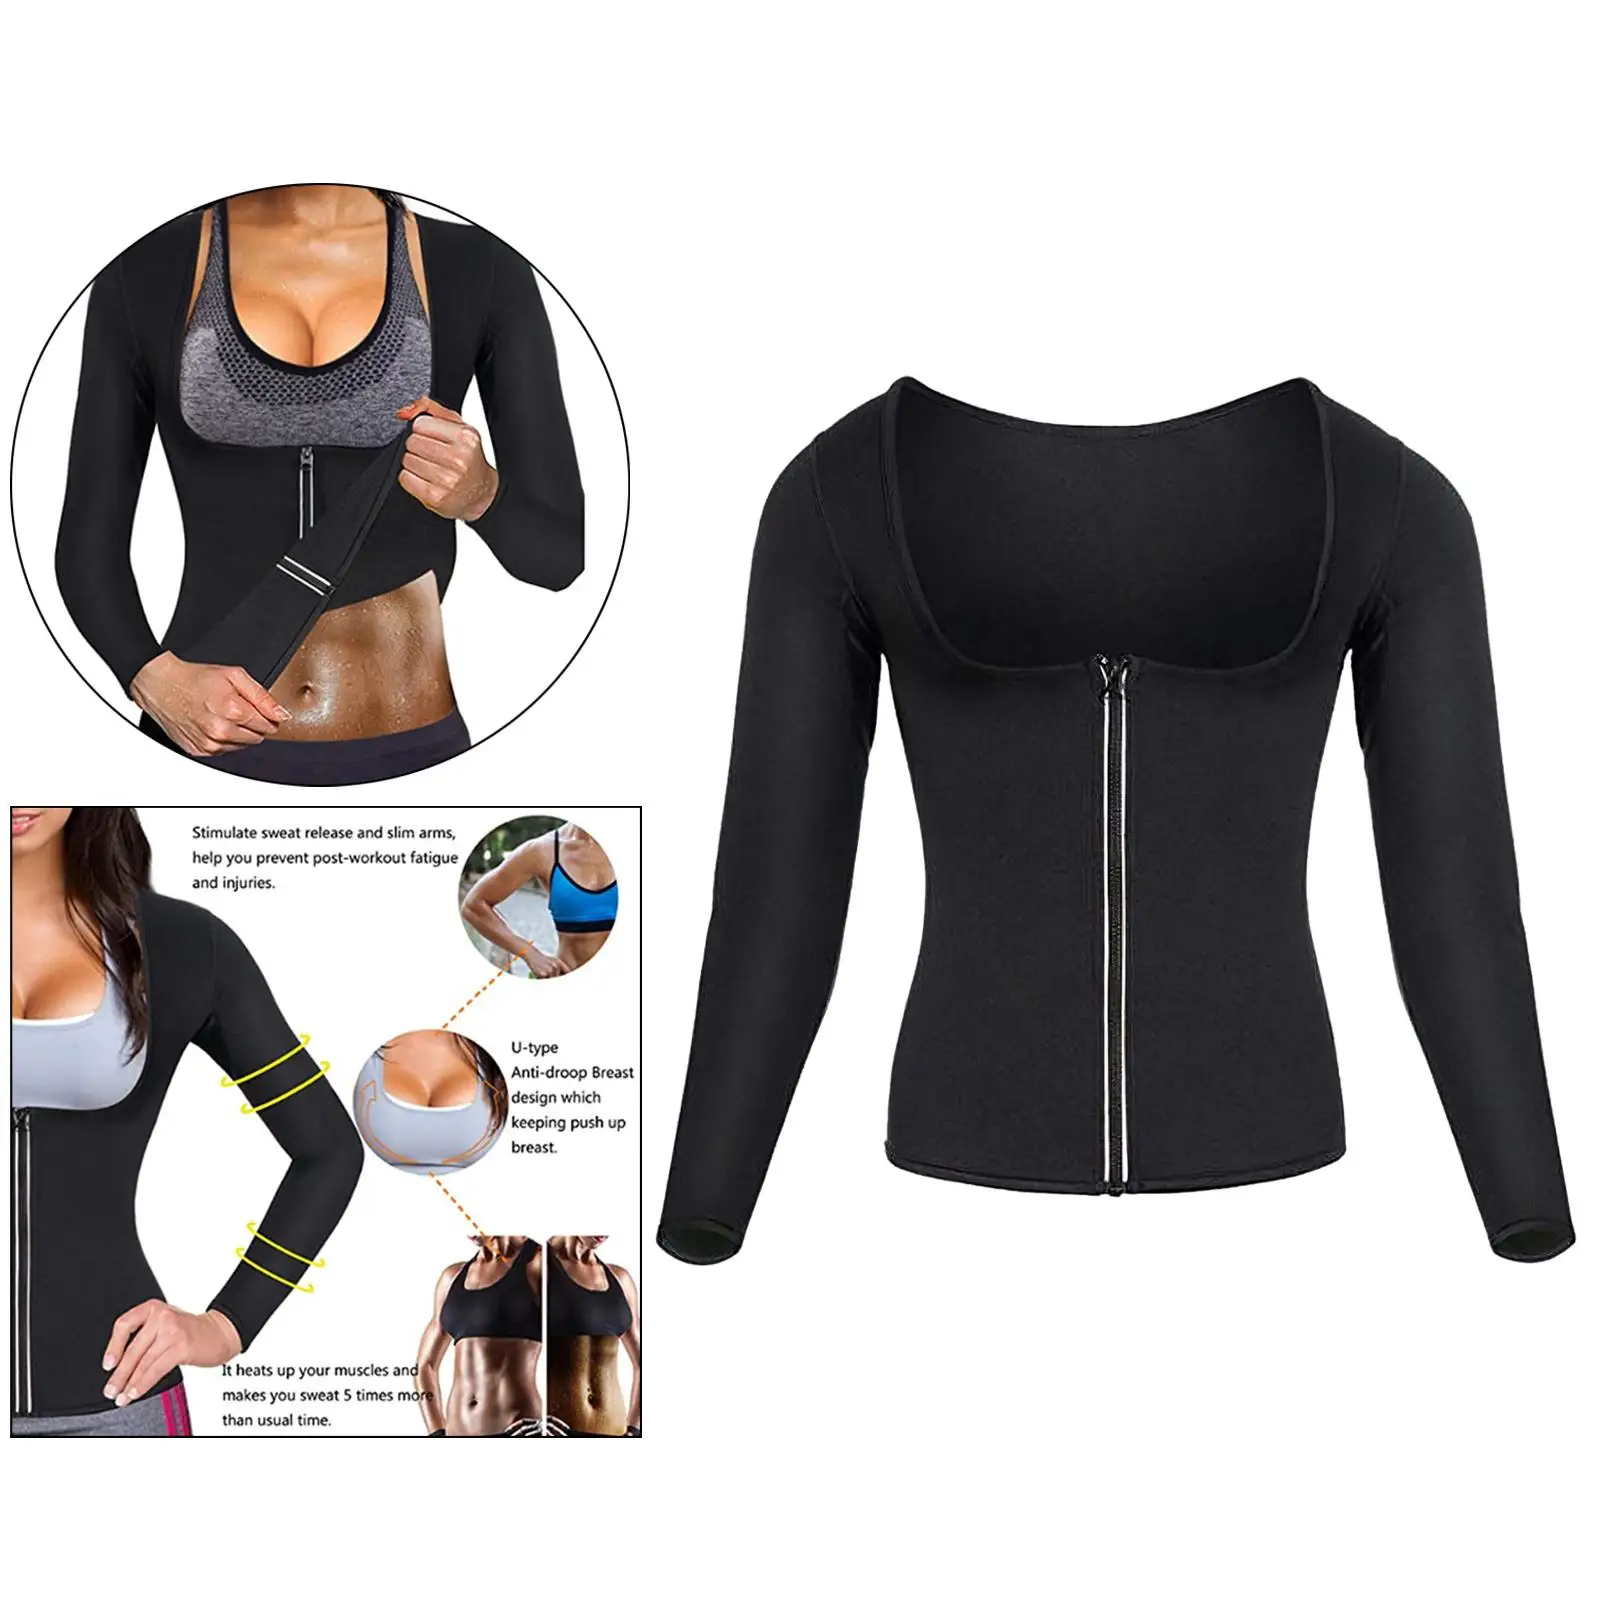 Women`s Neoprene Sweat Sauna Suit Body Shaper Workout Weight Loss Hot Waist Trainer Shirt Top with Sleeves